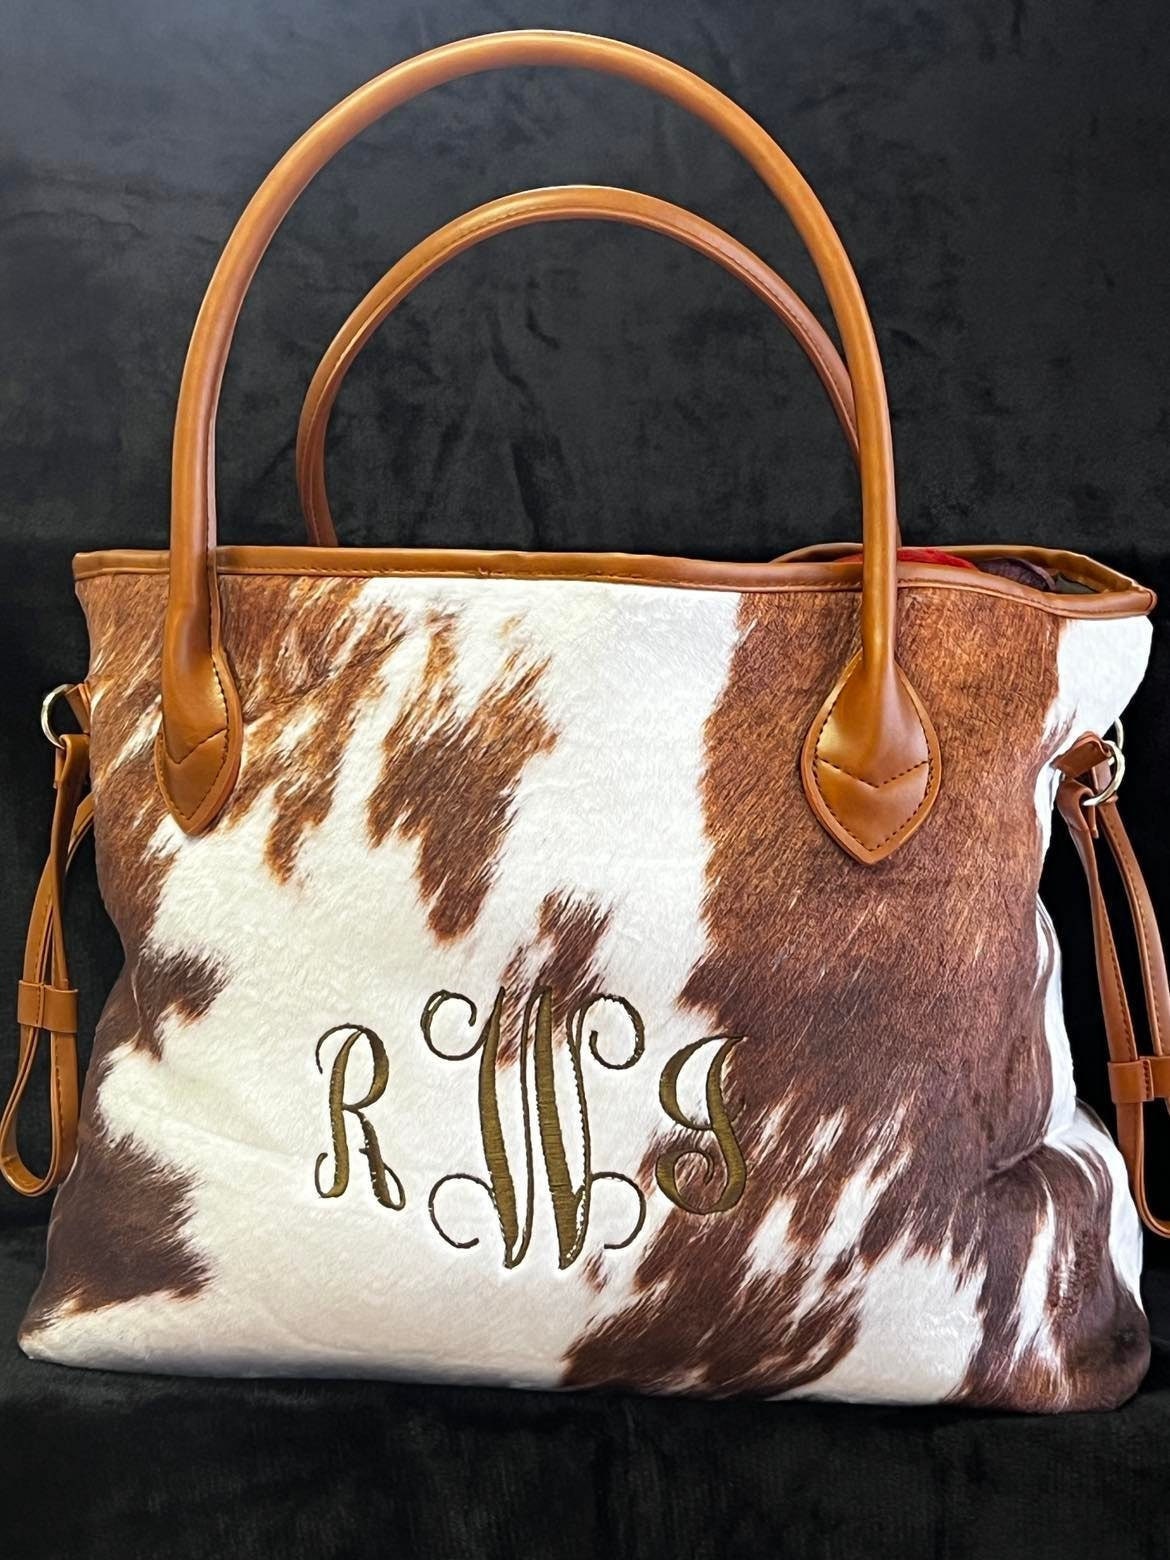 Cowprint Crossbody Bag  NWT Faux Leather Western Boho Animal Print Purse -  $37 (62% Off Retail) - From Cristina